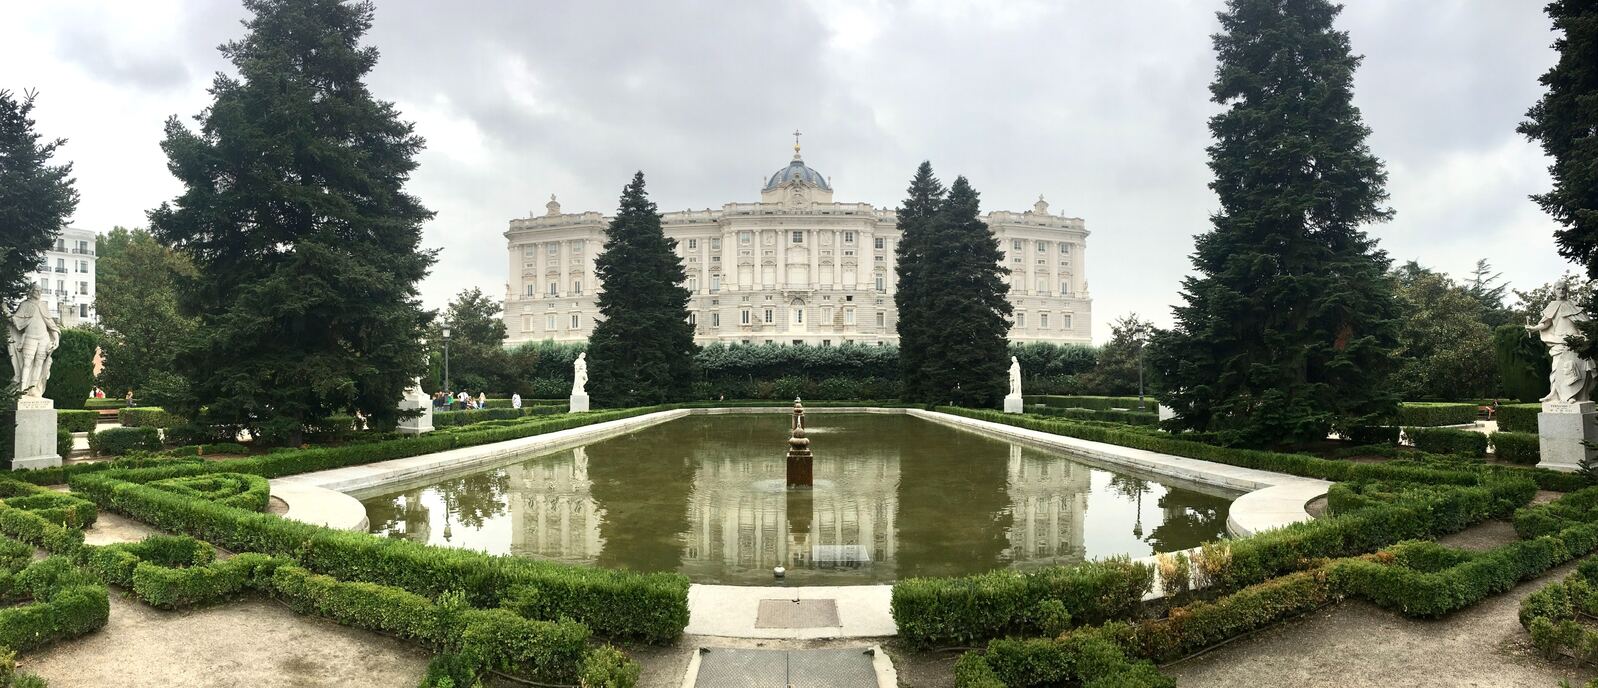 Image of Royal Palace from Sabatini Gardens by Team PhotoHound